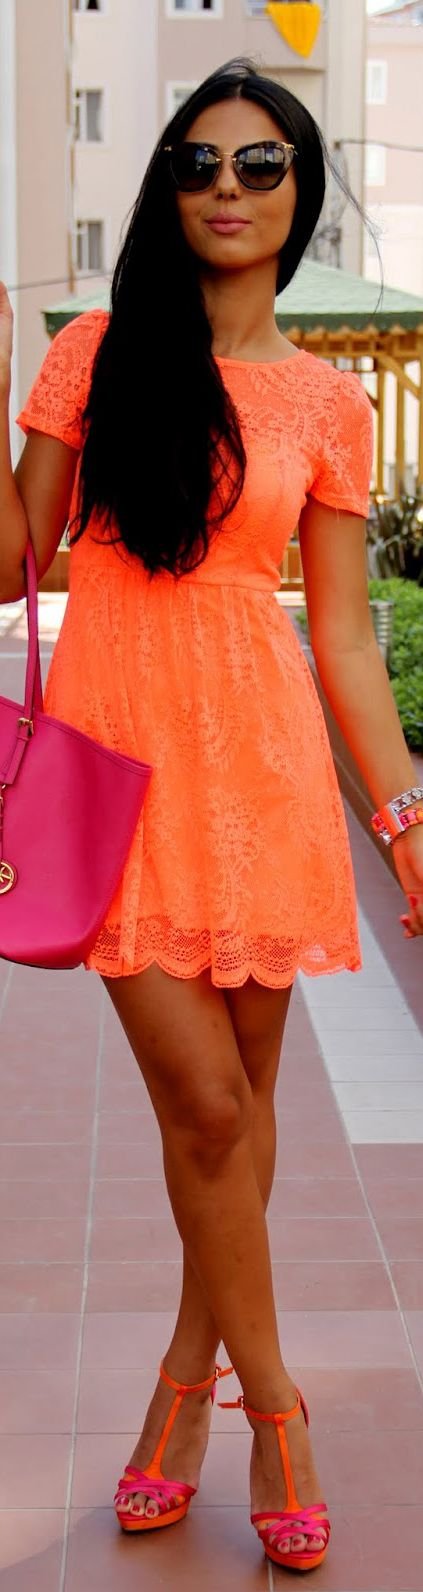 Orange skirt street style